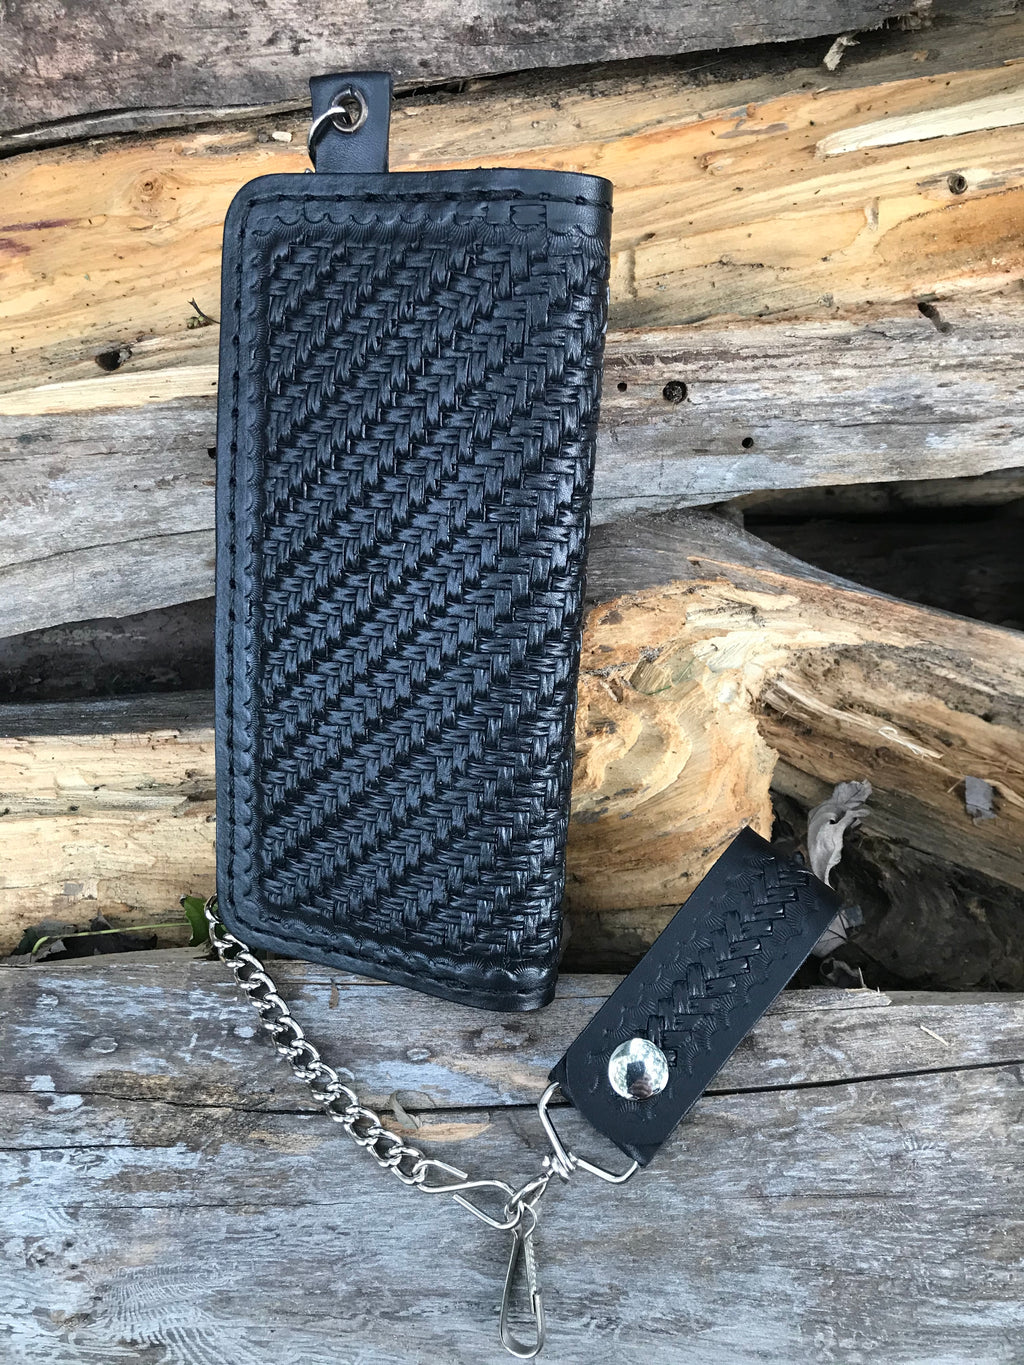 Tape Measure Holder – Black Swamp Leather Company